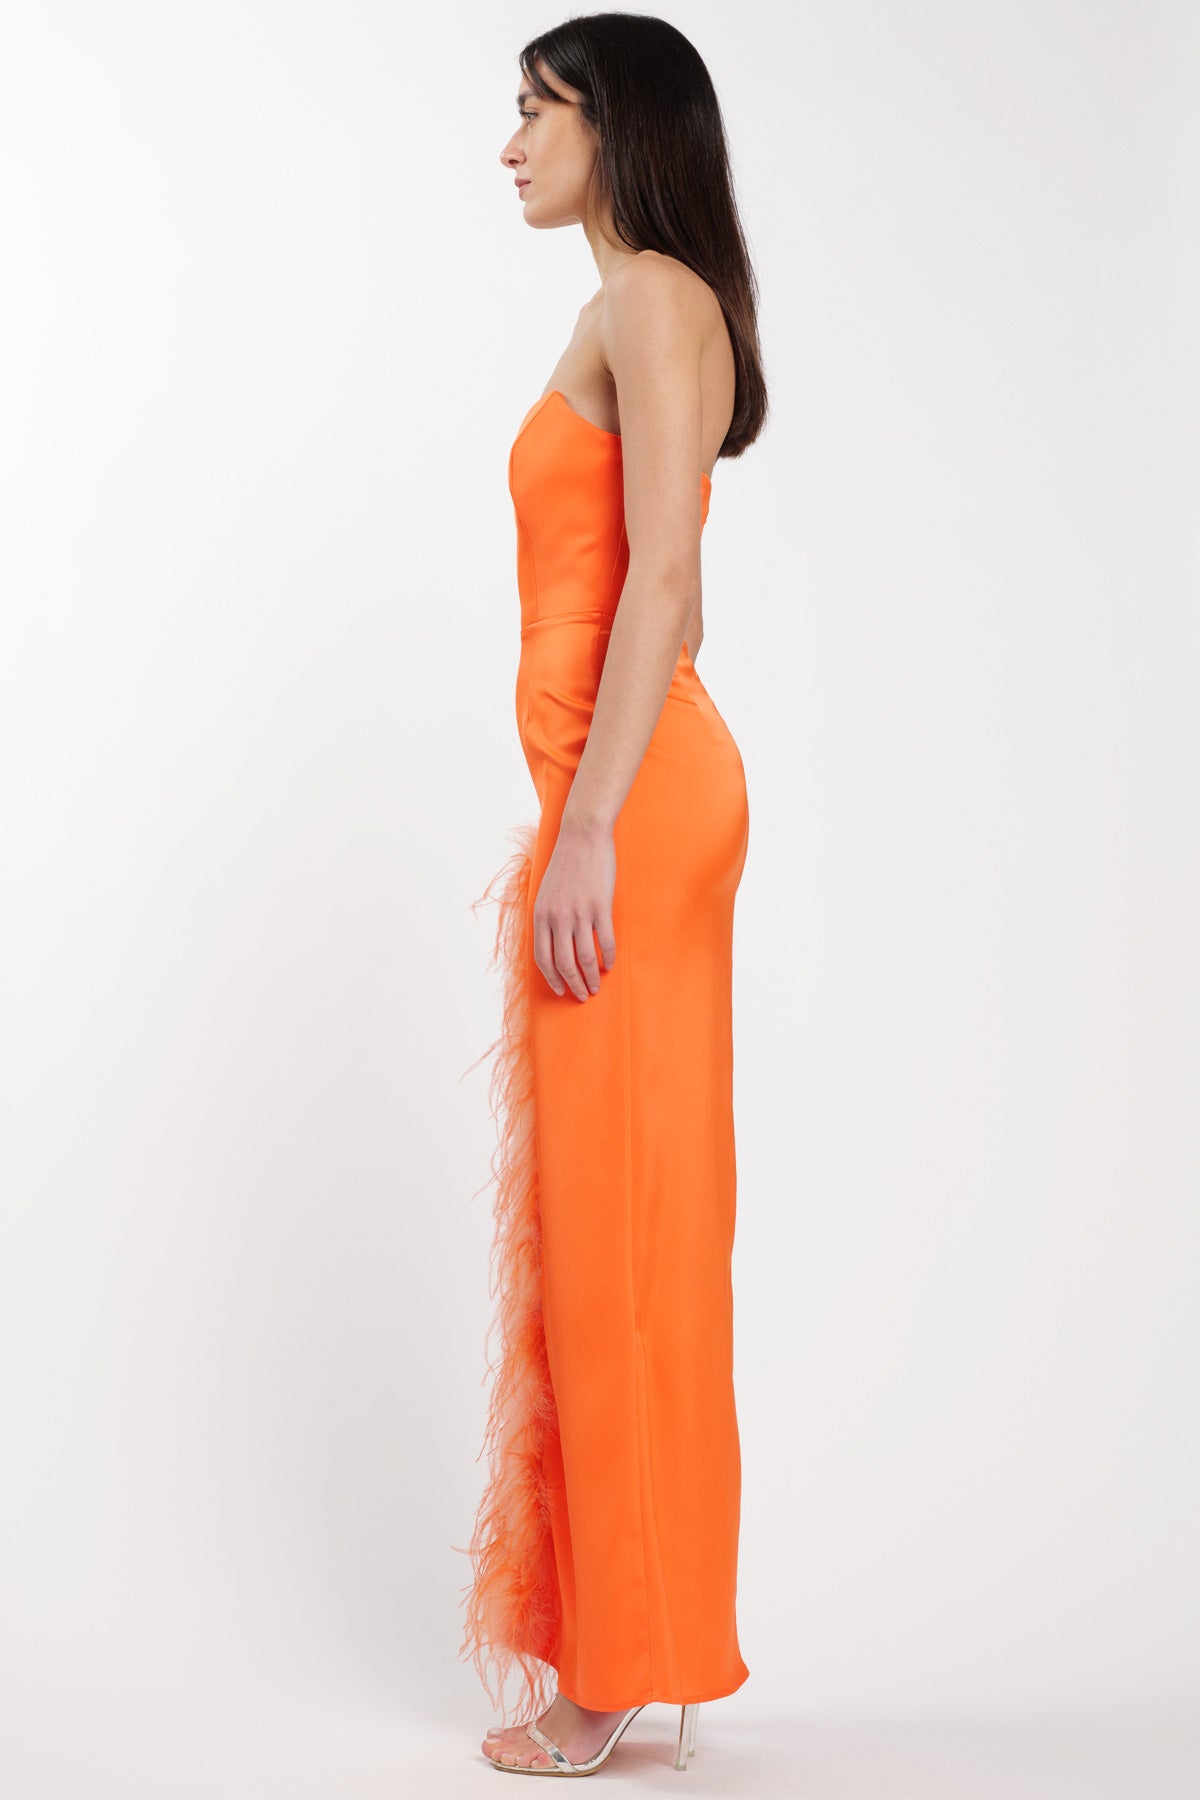 Orange Plume Dress